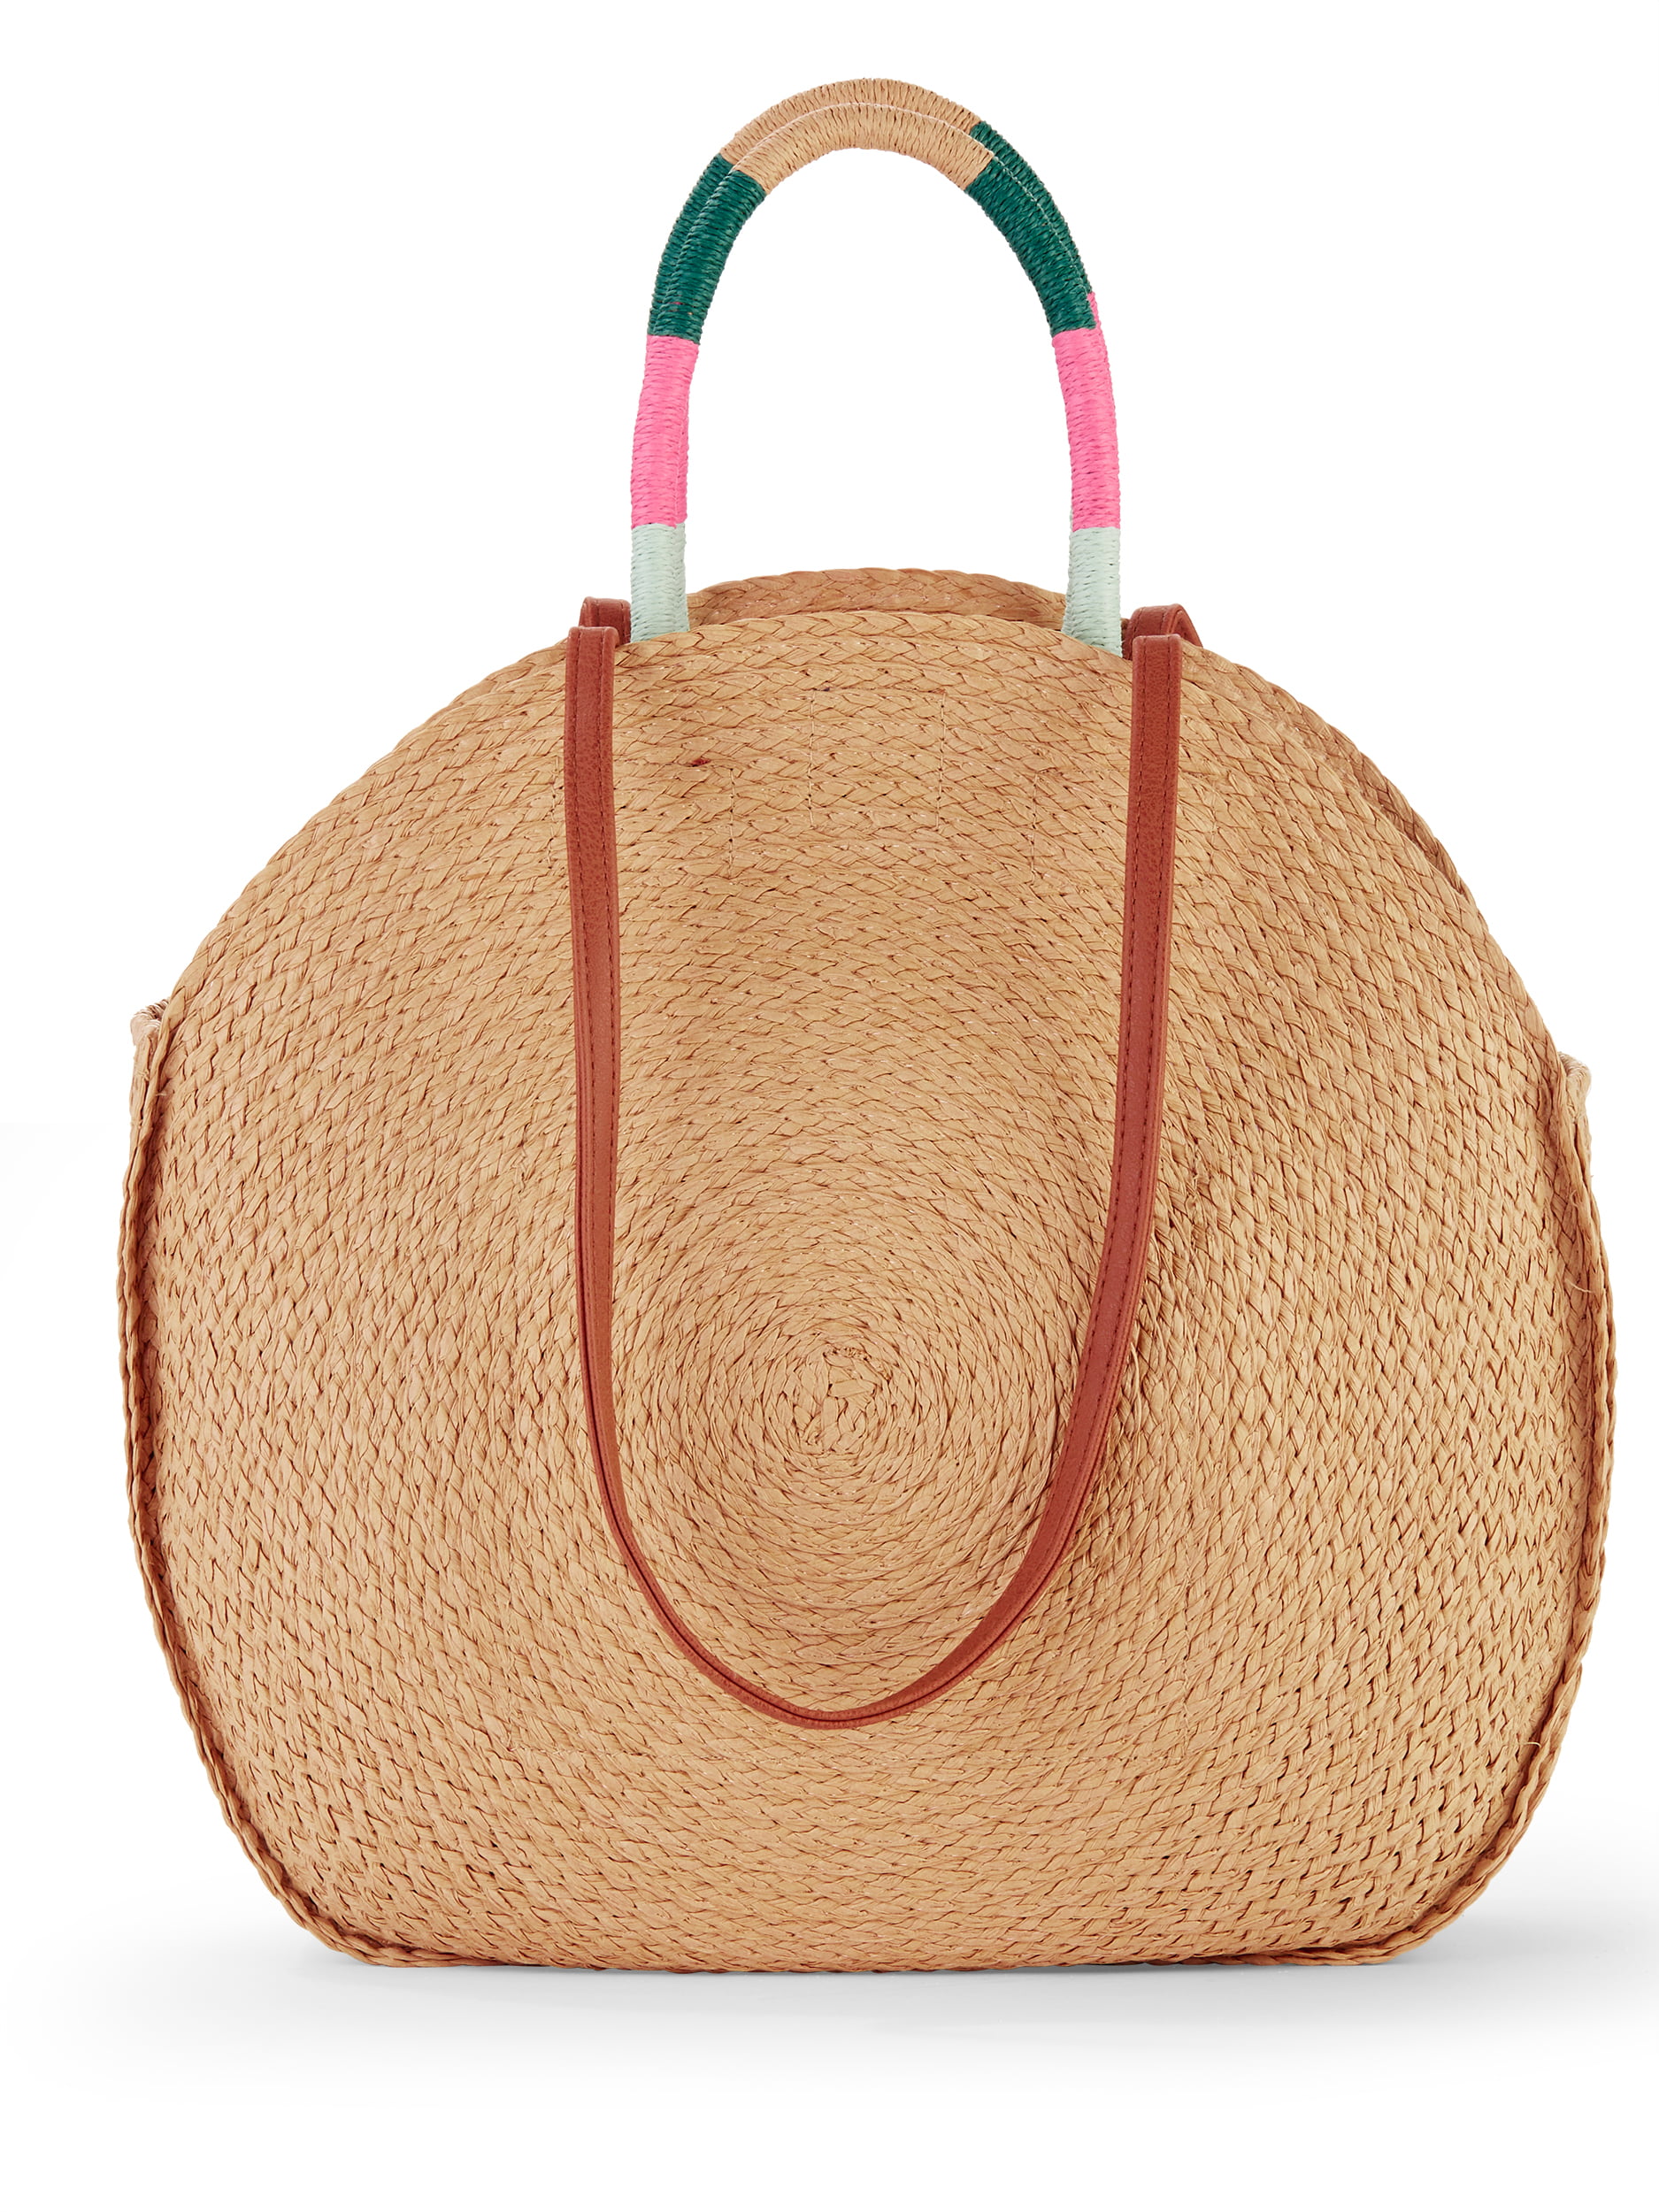 Buy Online Raffia Tote Bag & Round Tote Handbag - Tote Handbag